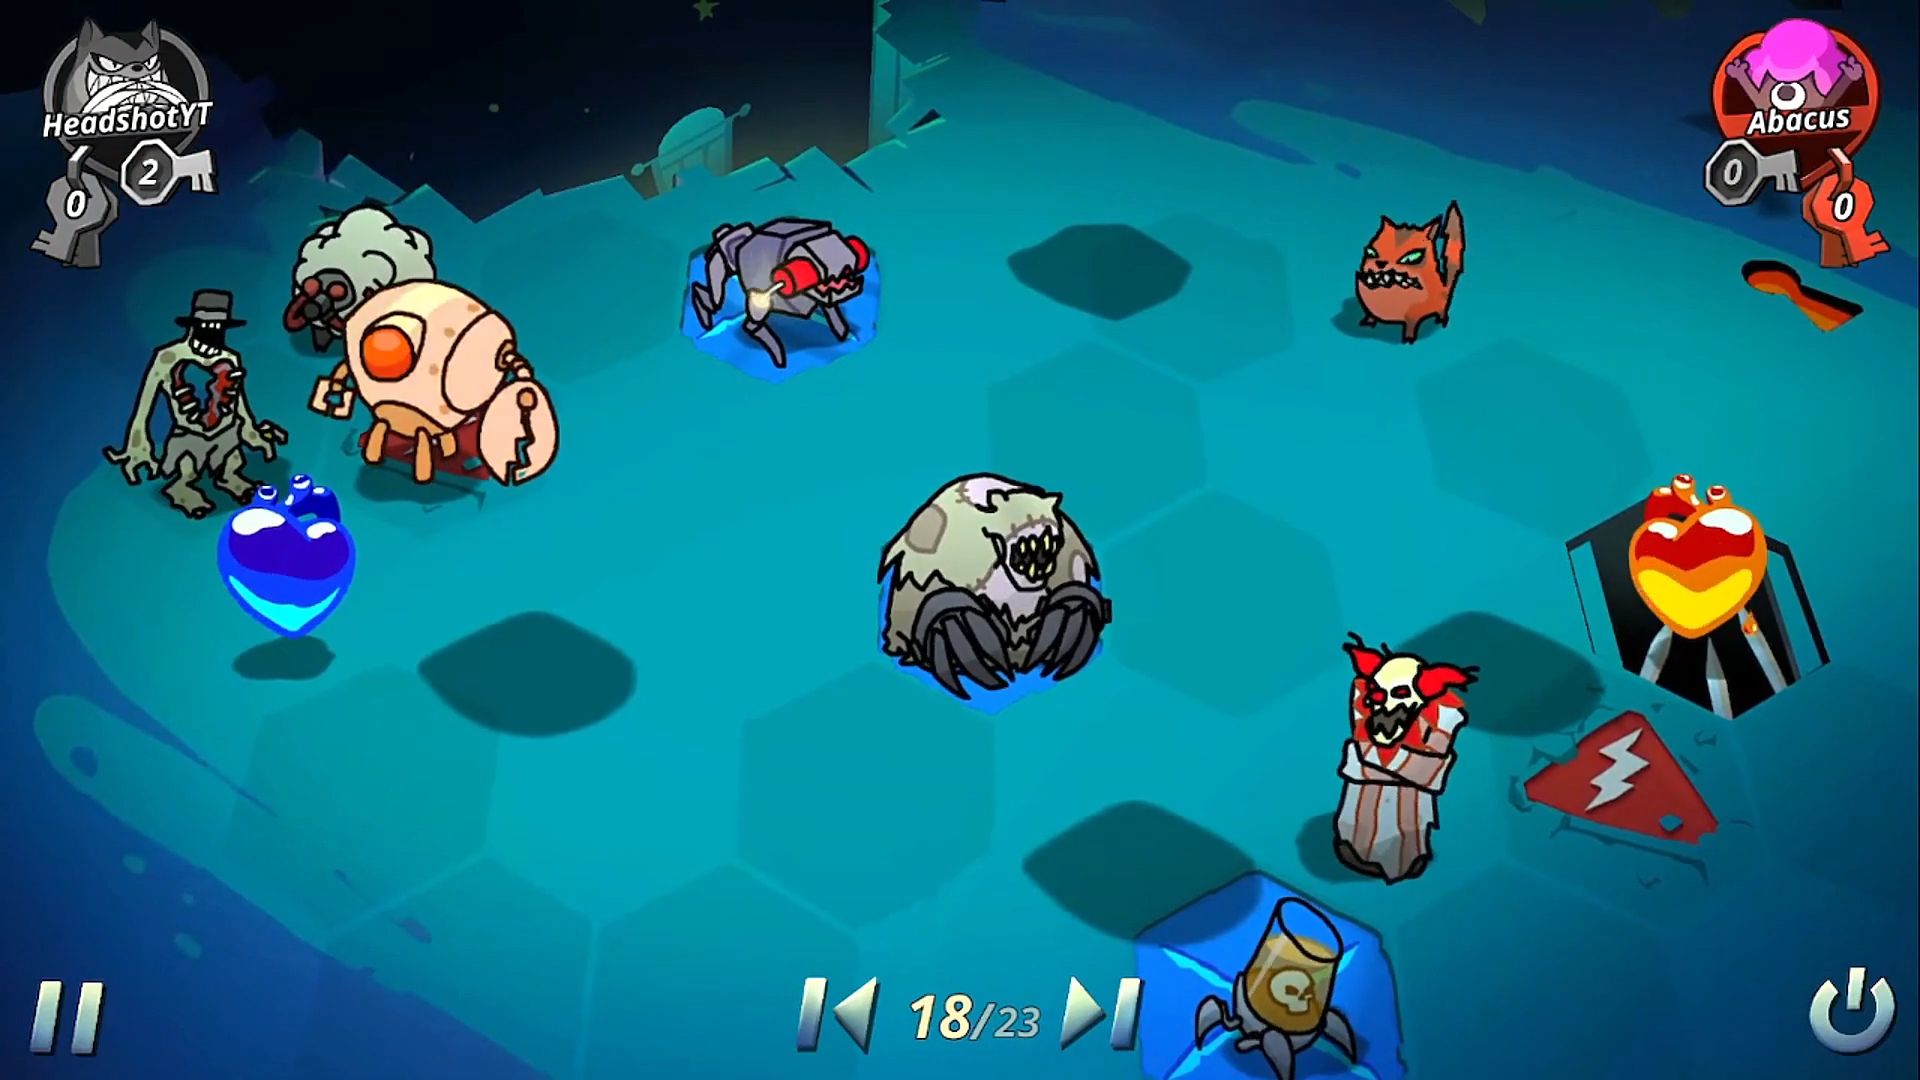 Phobies - Android game screenshots.